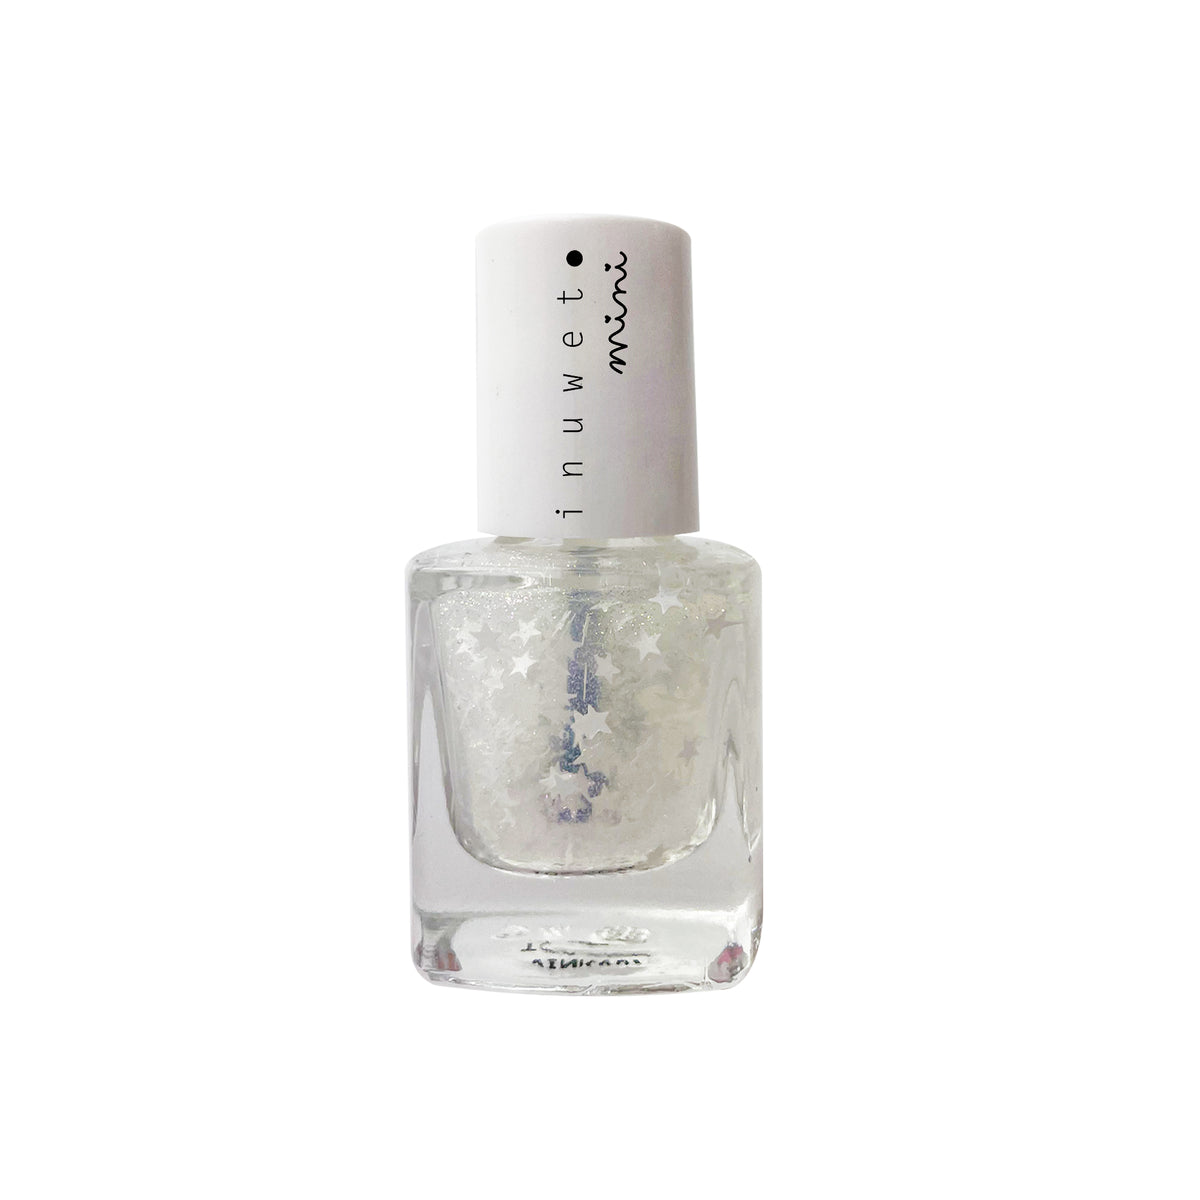 inuwet water based nail polish - no perfume clear stars